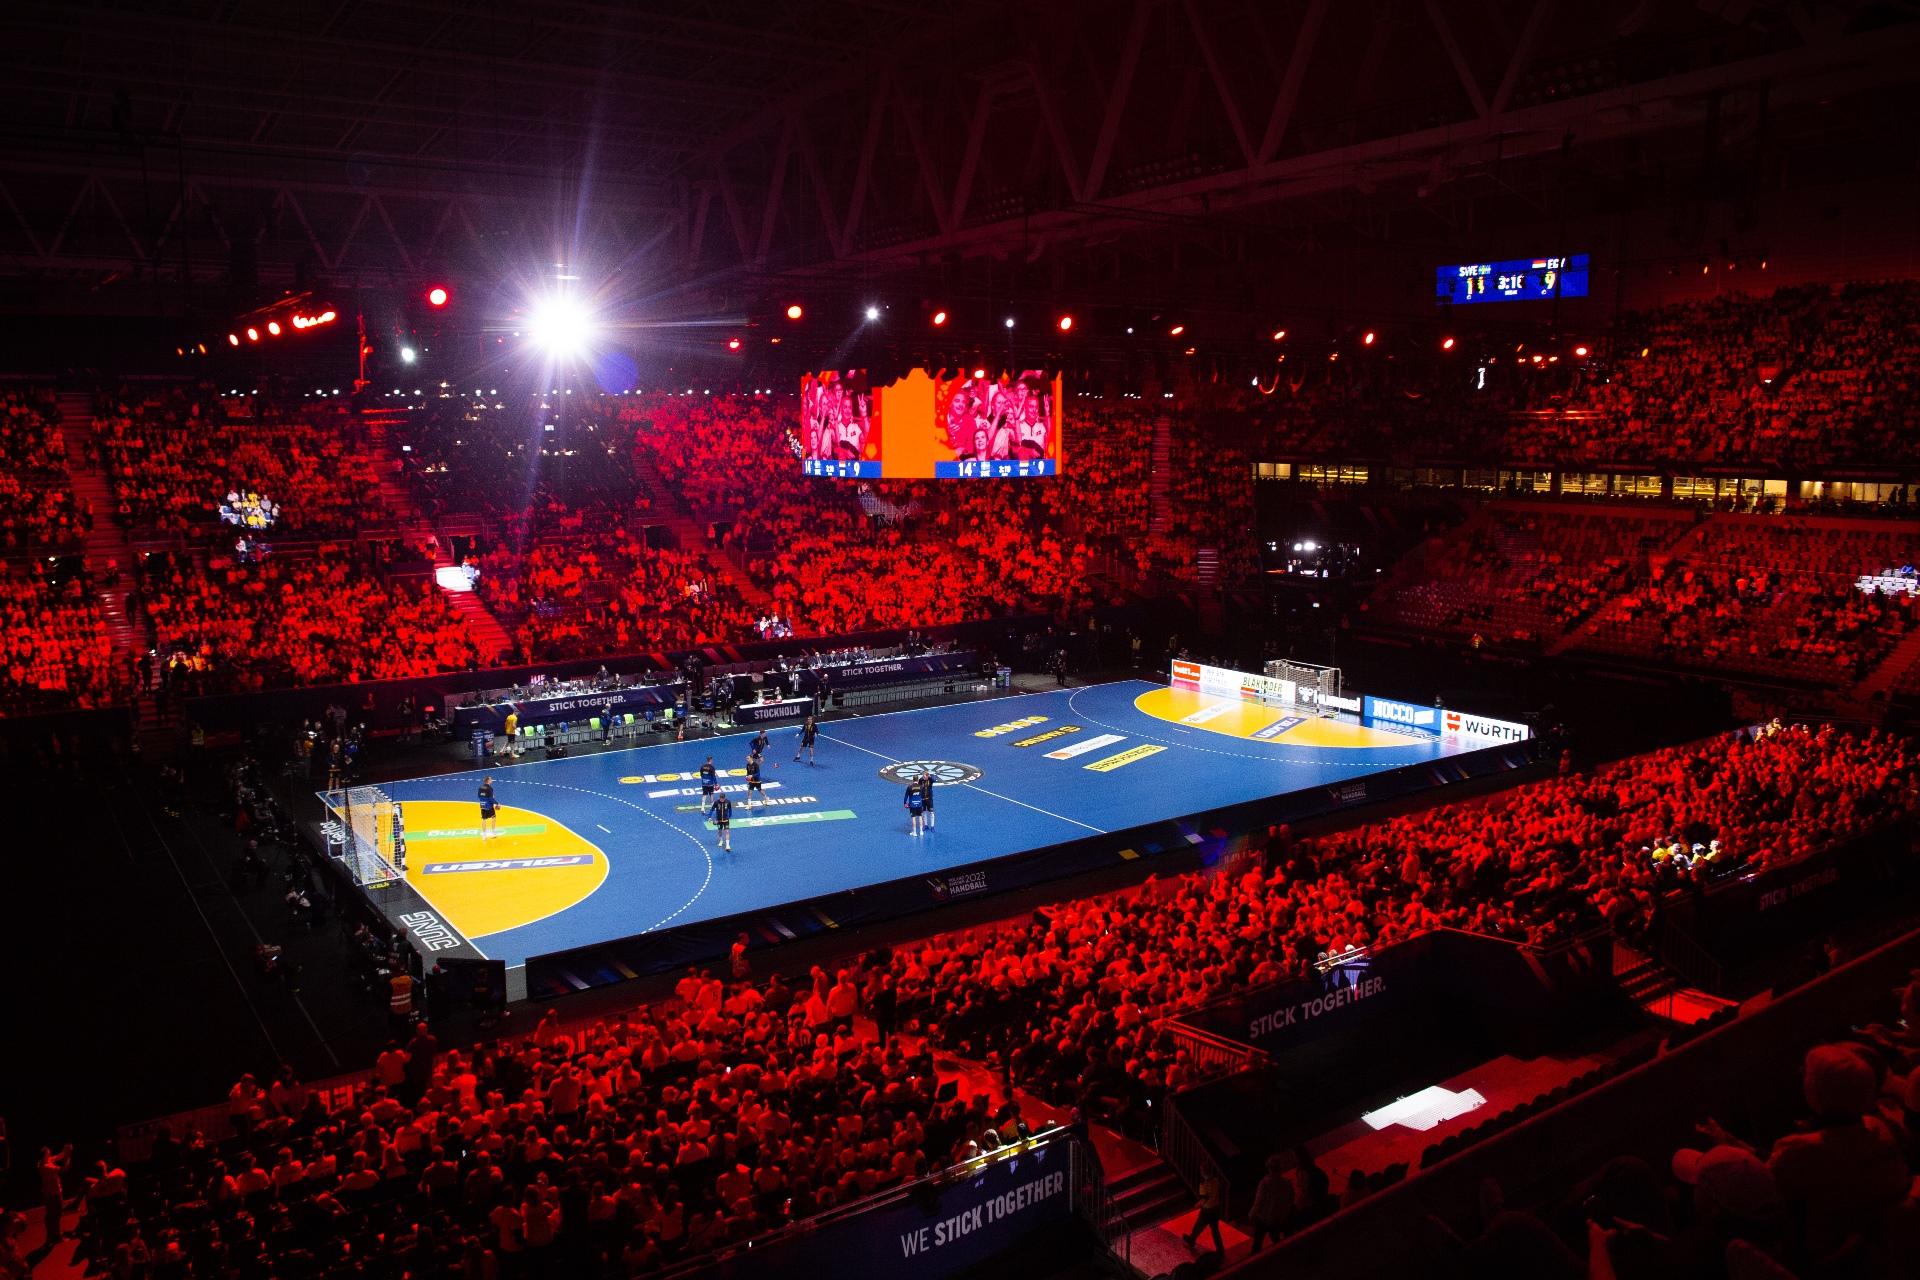 Team Denmark World Champion during the IHF Men's World Championship 2023,  Final Handball match between France